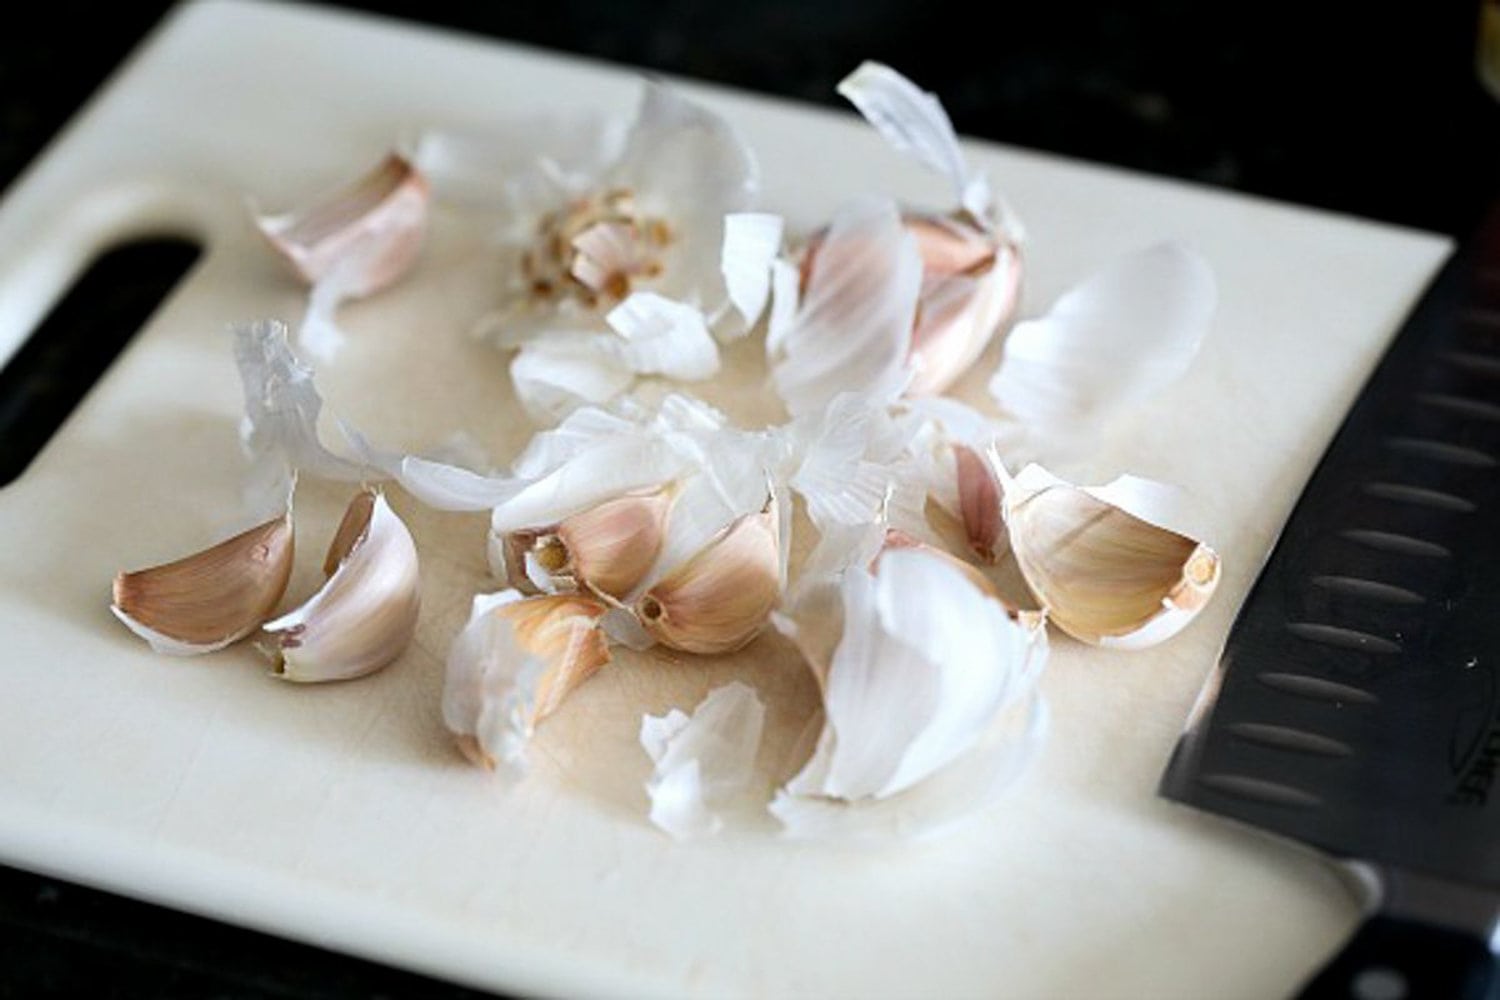 Garlic cloves chopped up